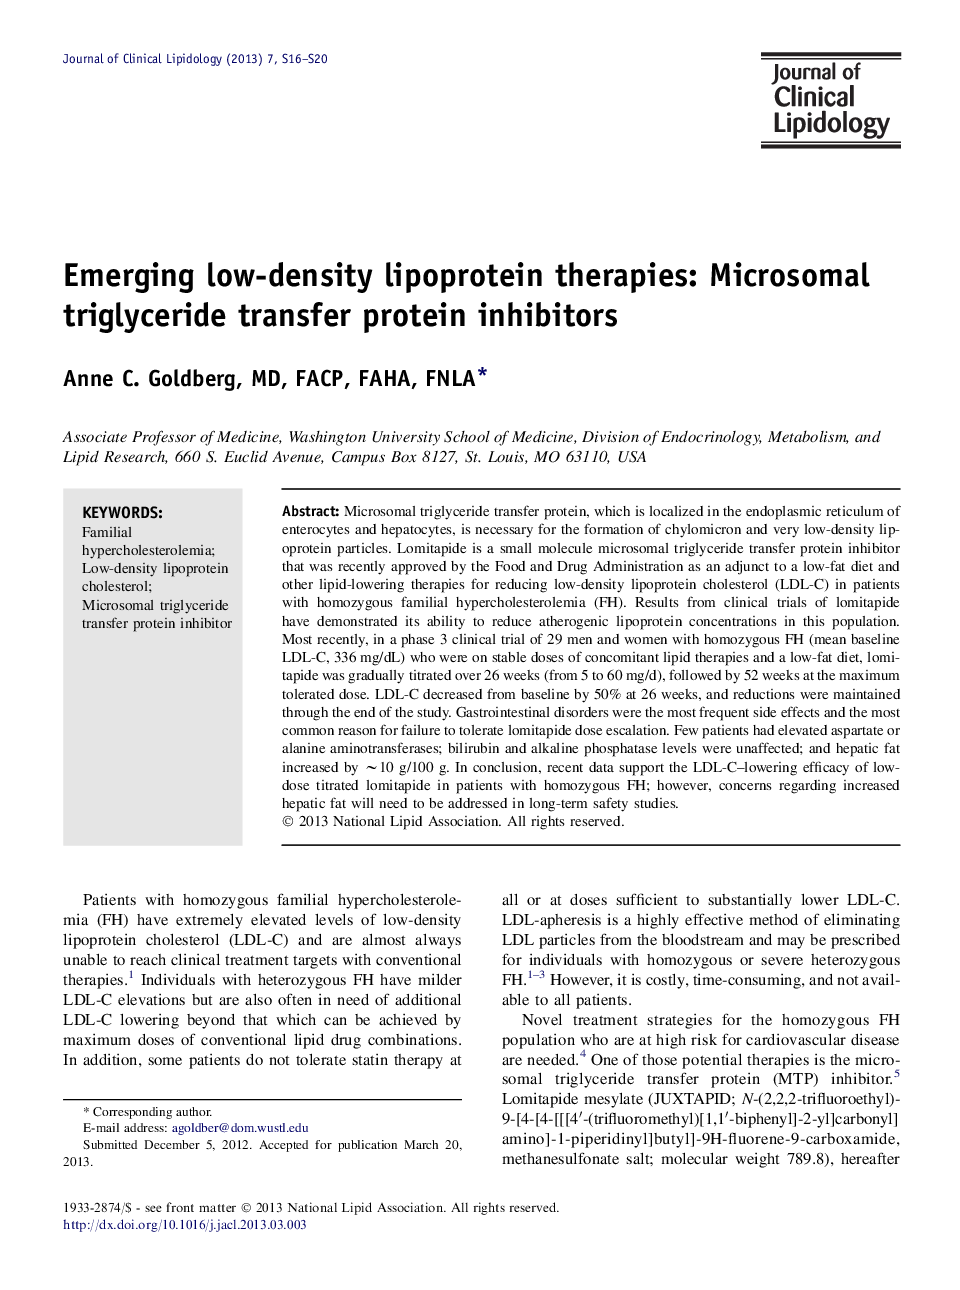 Emerging low-density lipoprotein therapies: Microsomal triglyceride transfer protein inhibitors